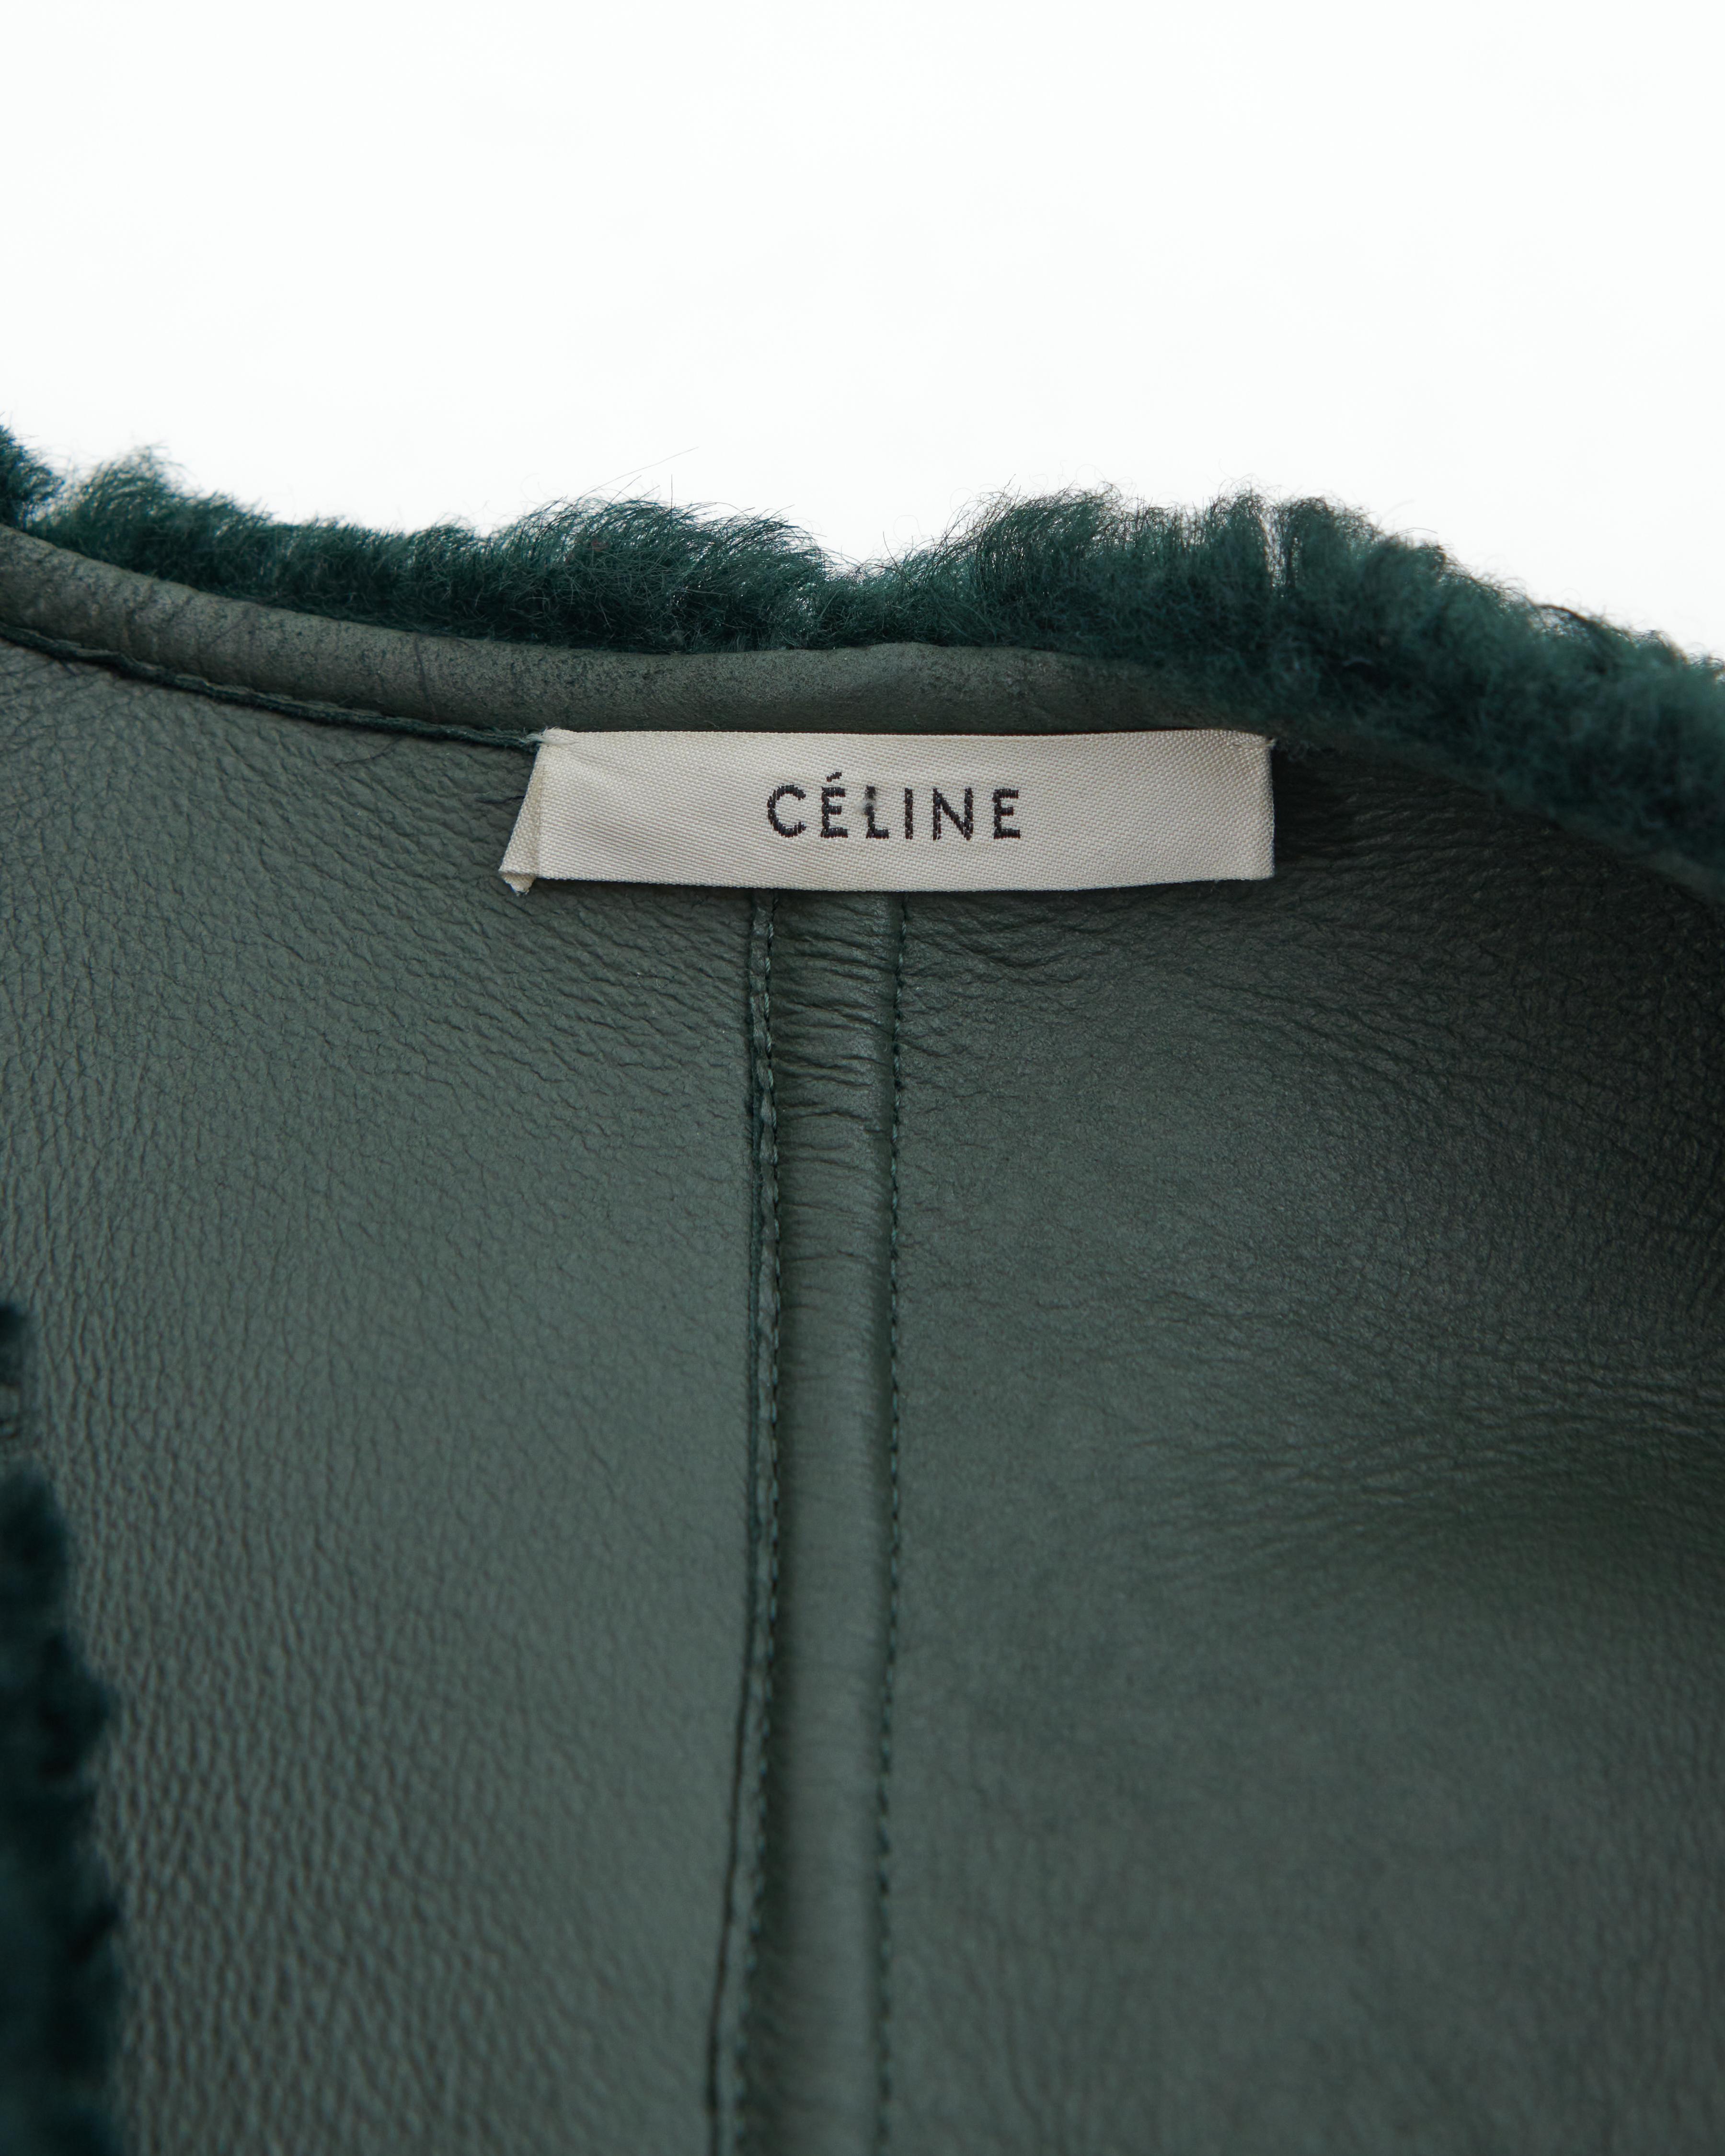 Céline by Phoebe Philo F/W 2016 Green natural sheepskin coat 3